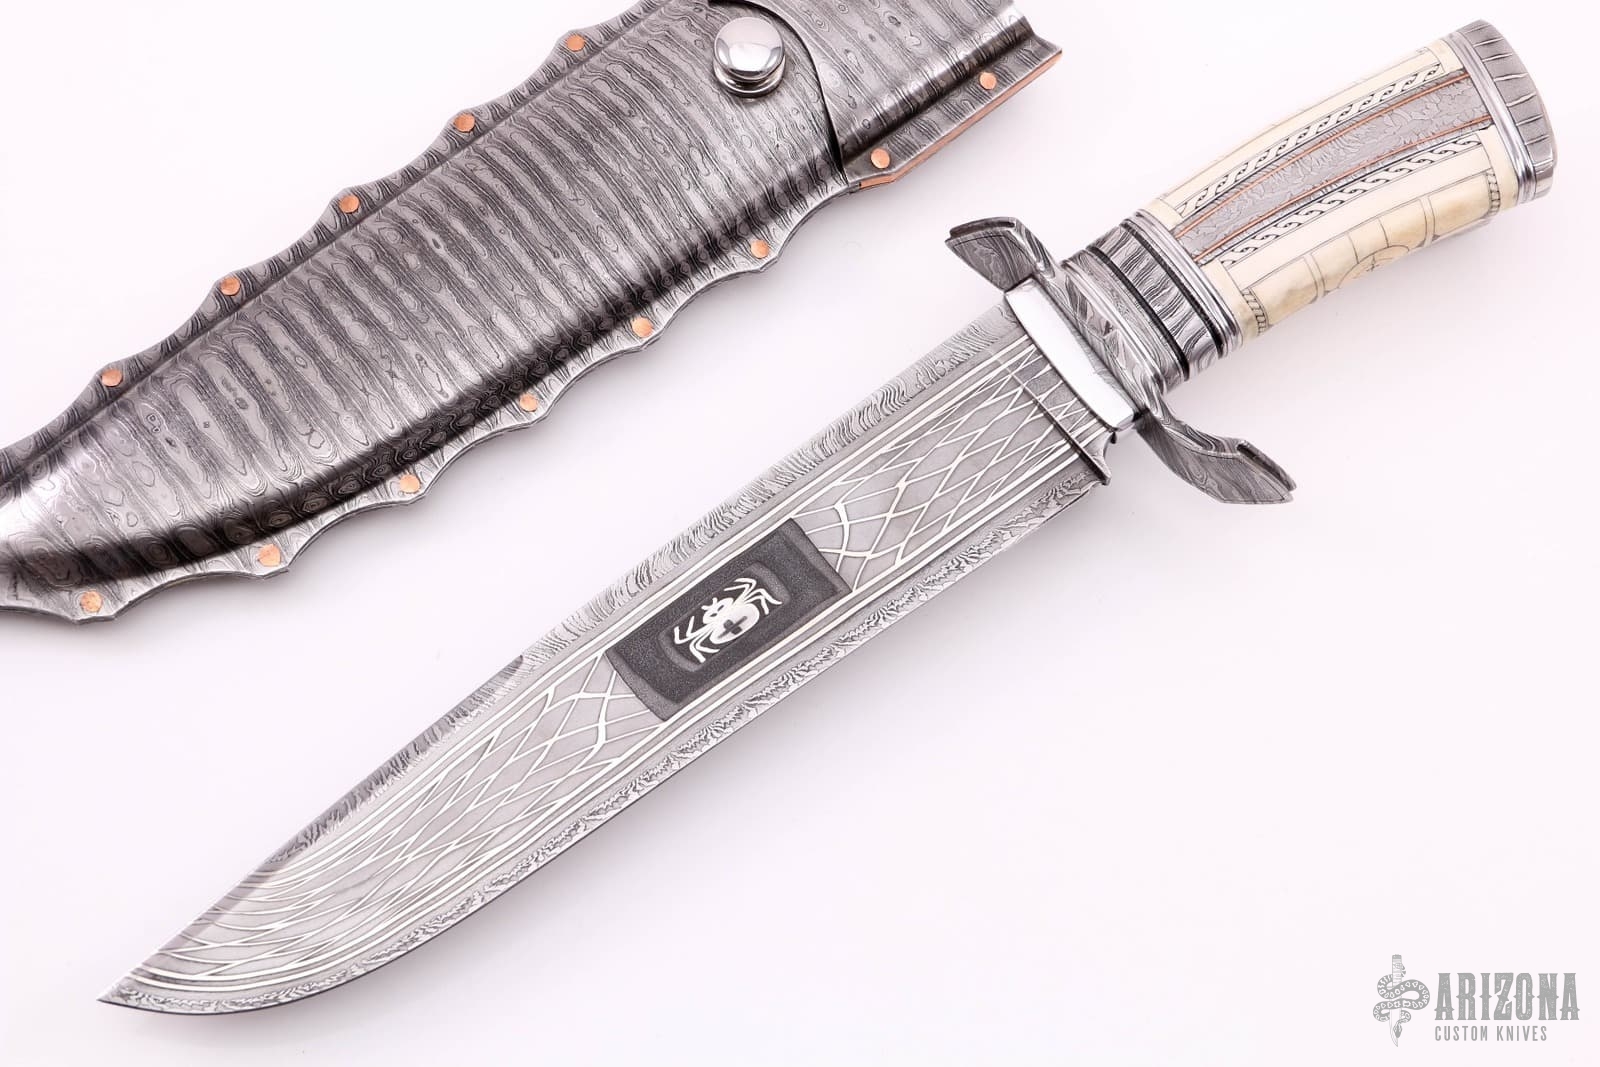 Michael Andersson Custom Knives